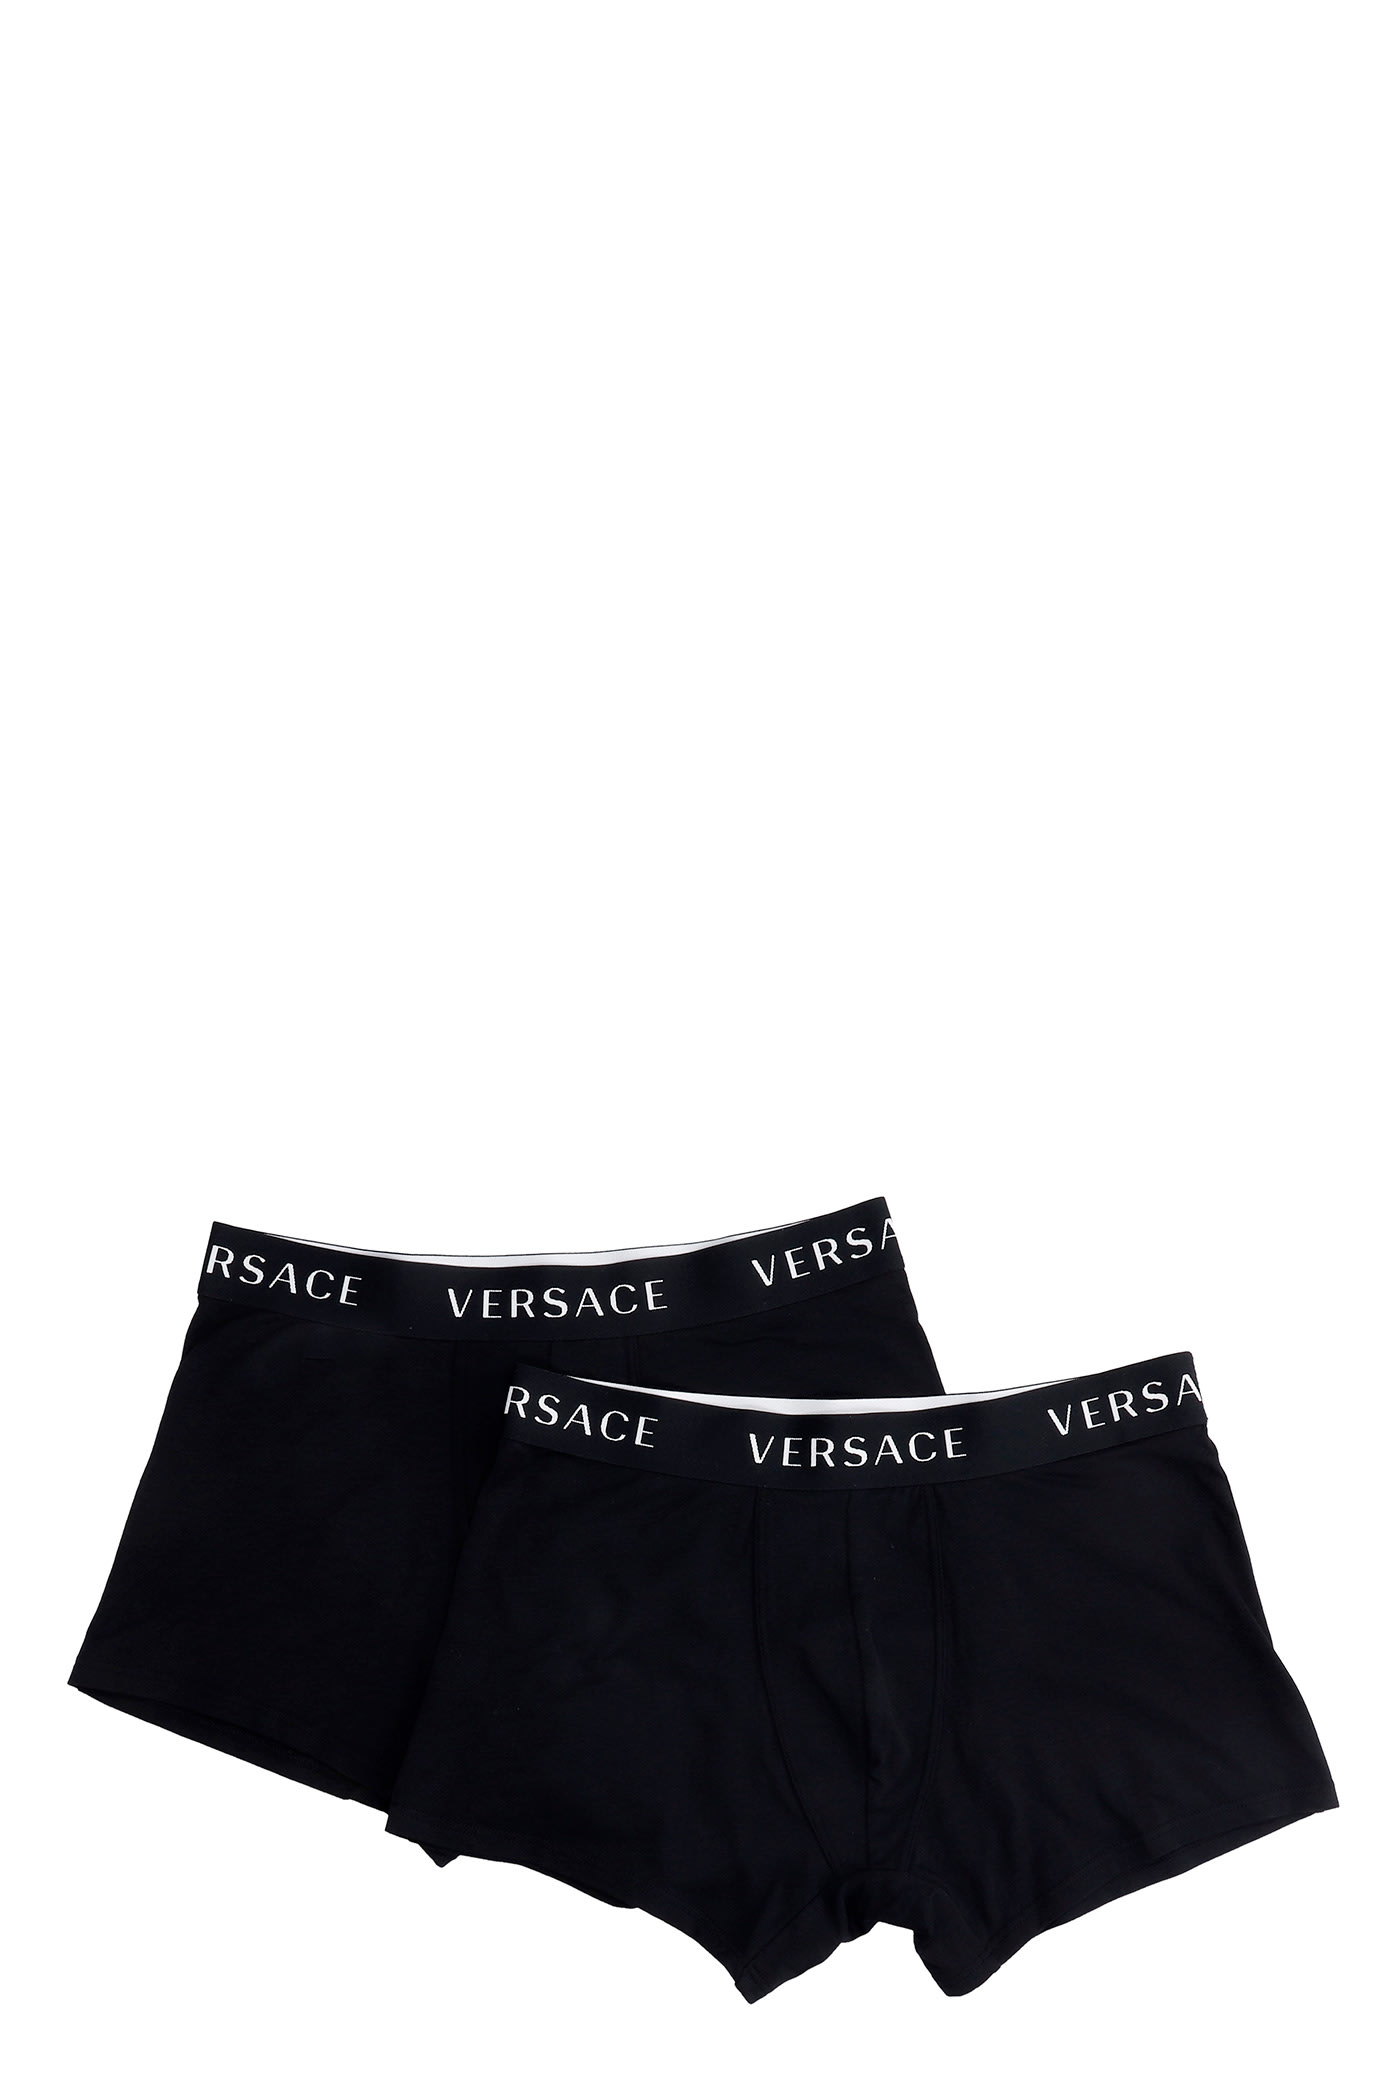 Versace Lingerie In Black Cotton